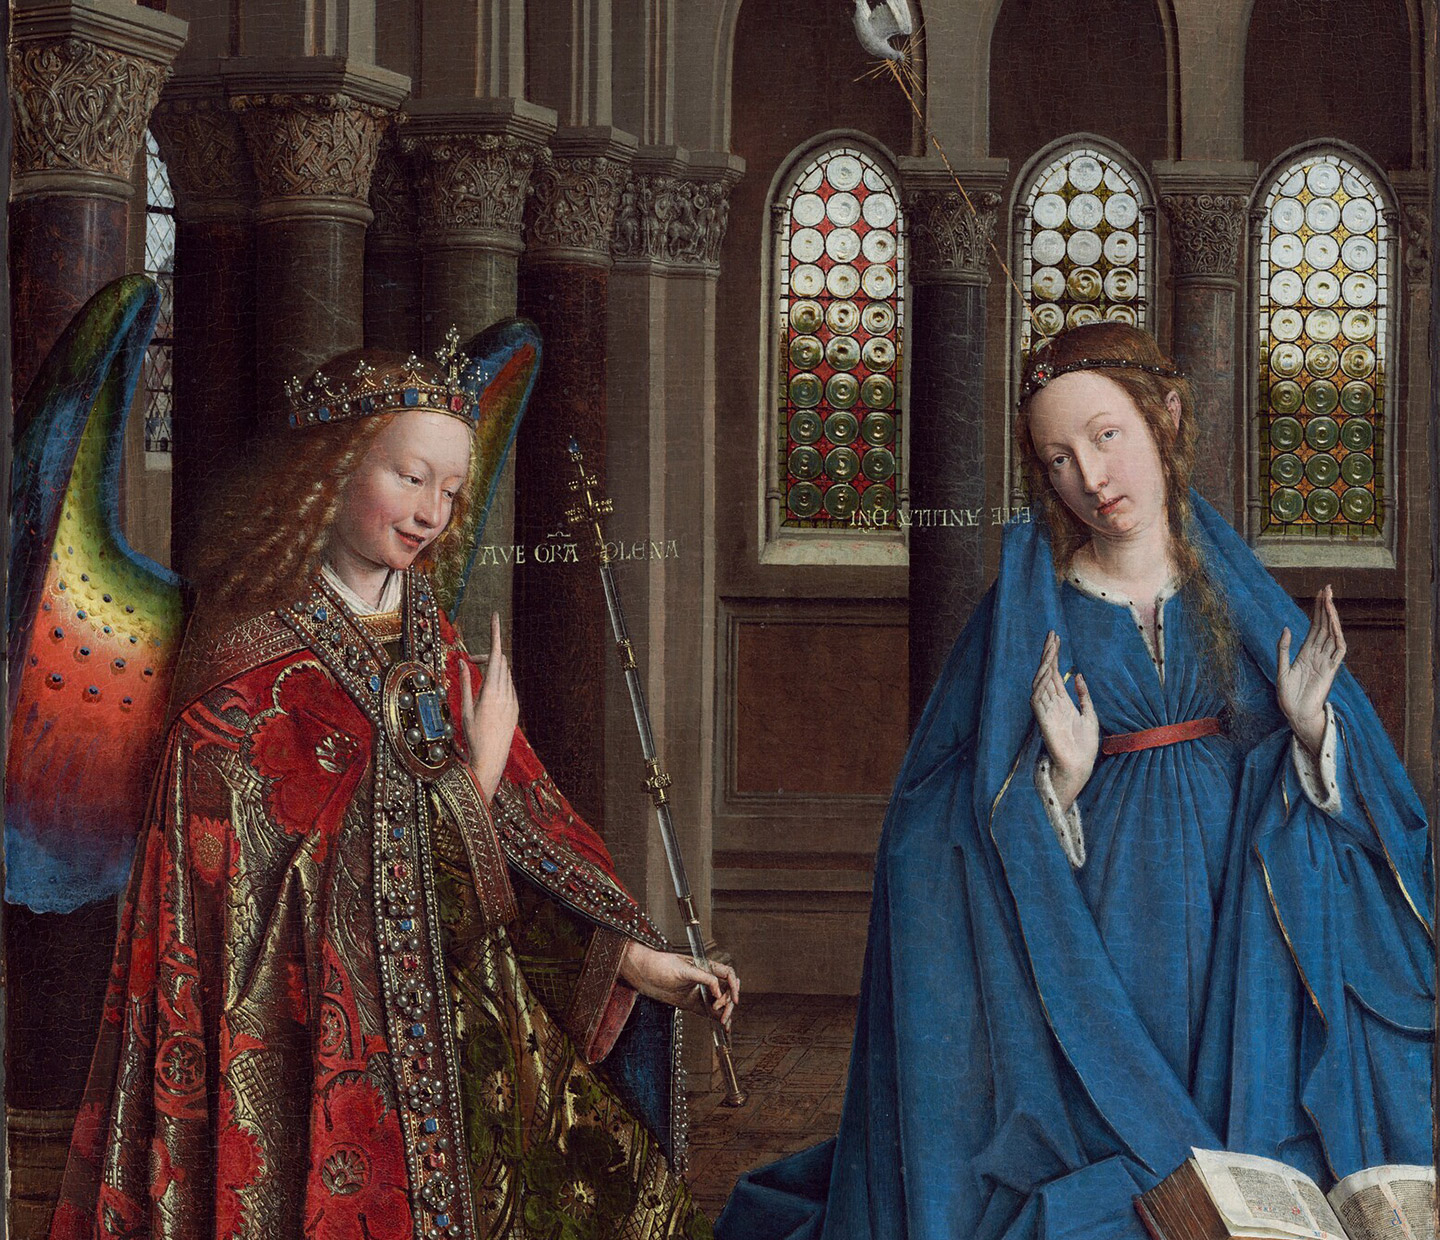 Jan van Eyck: The Annunciation